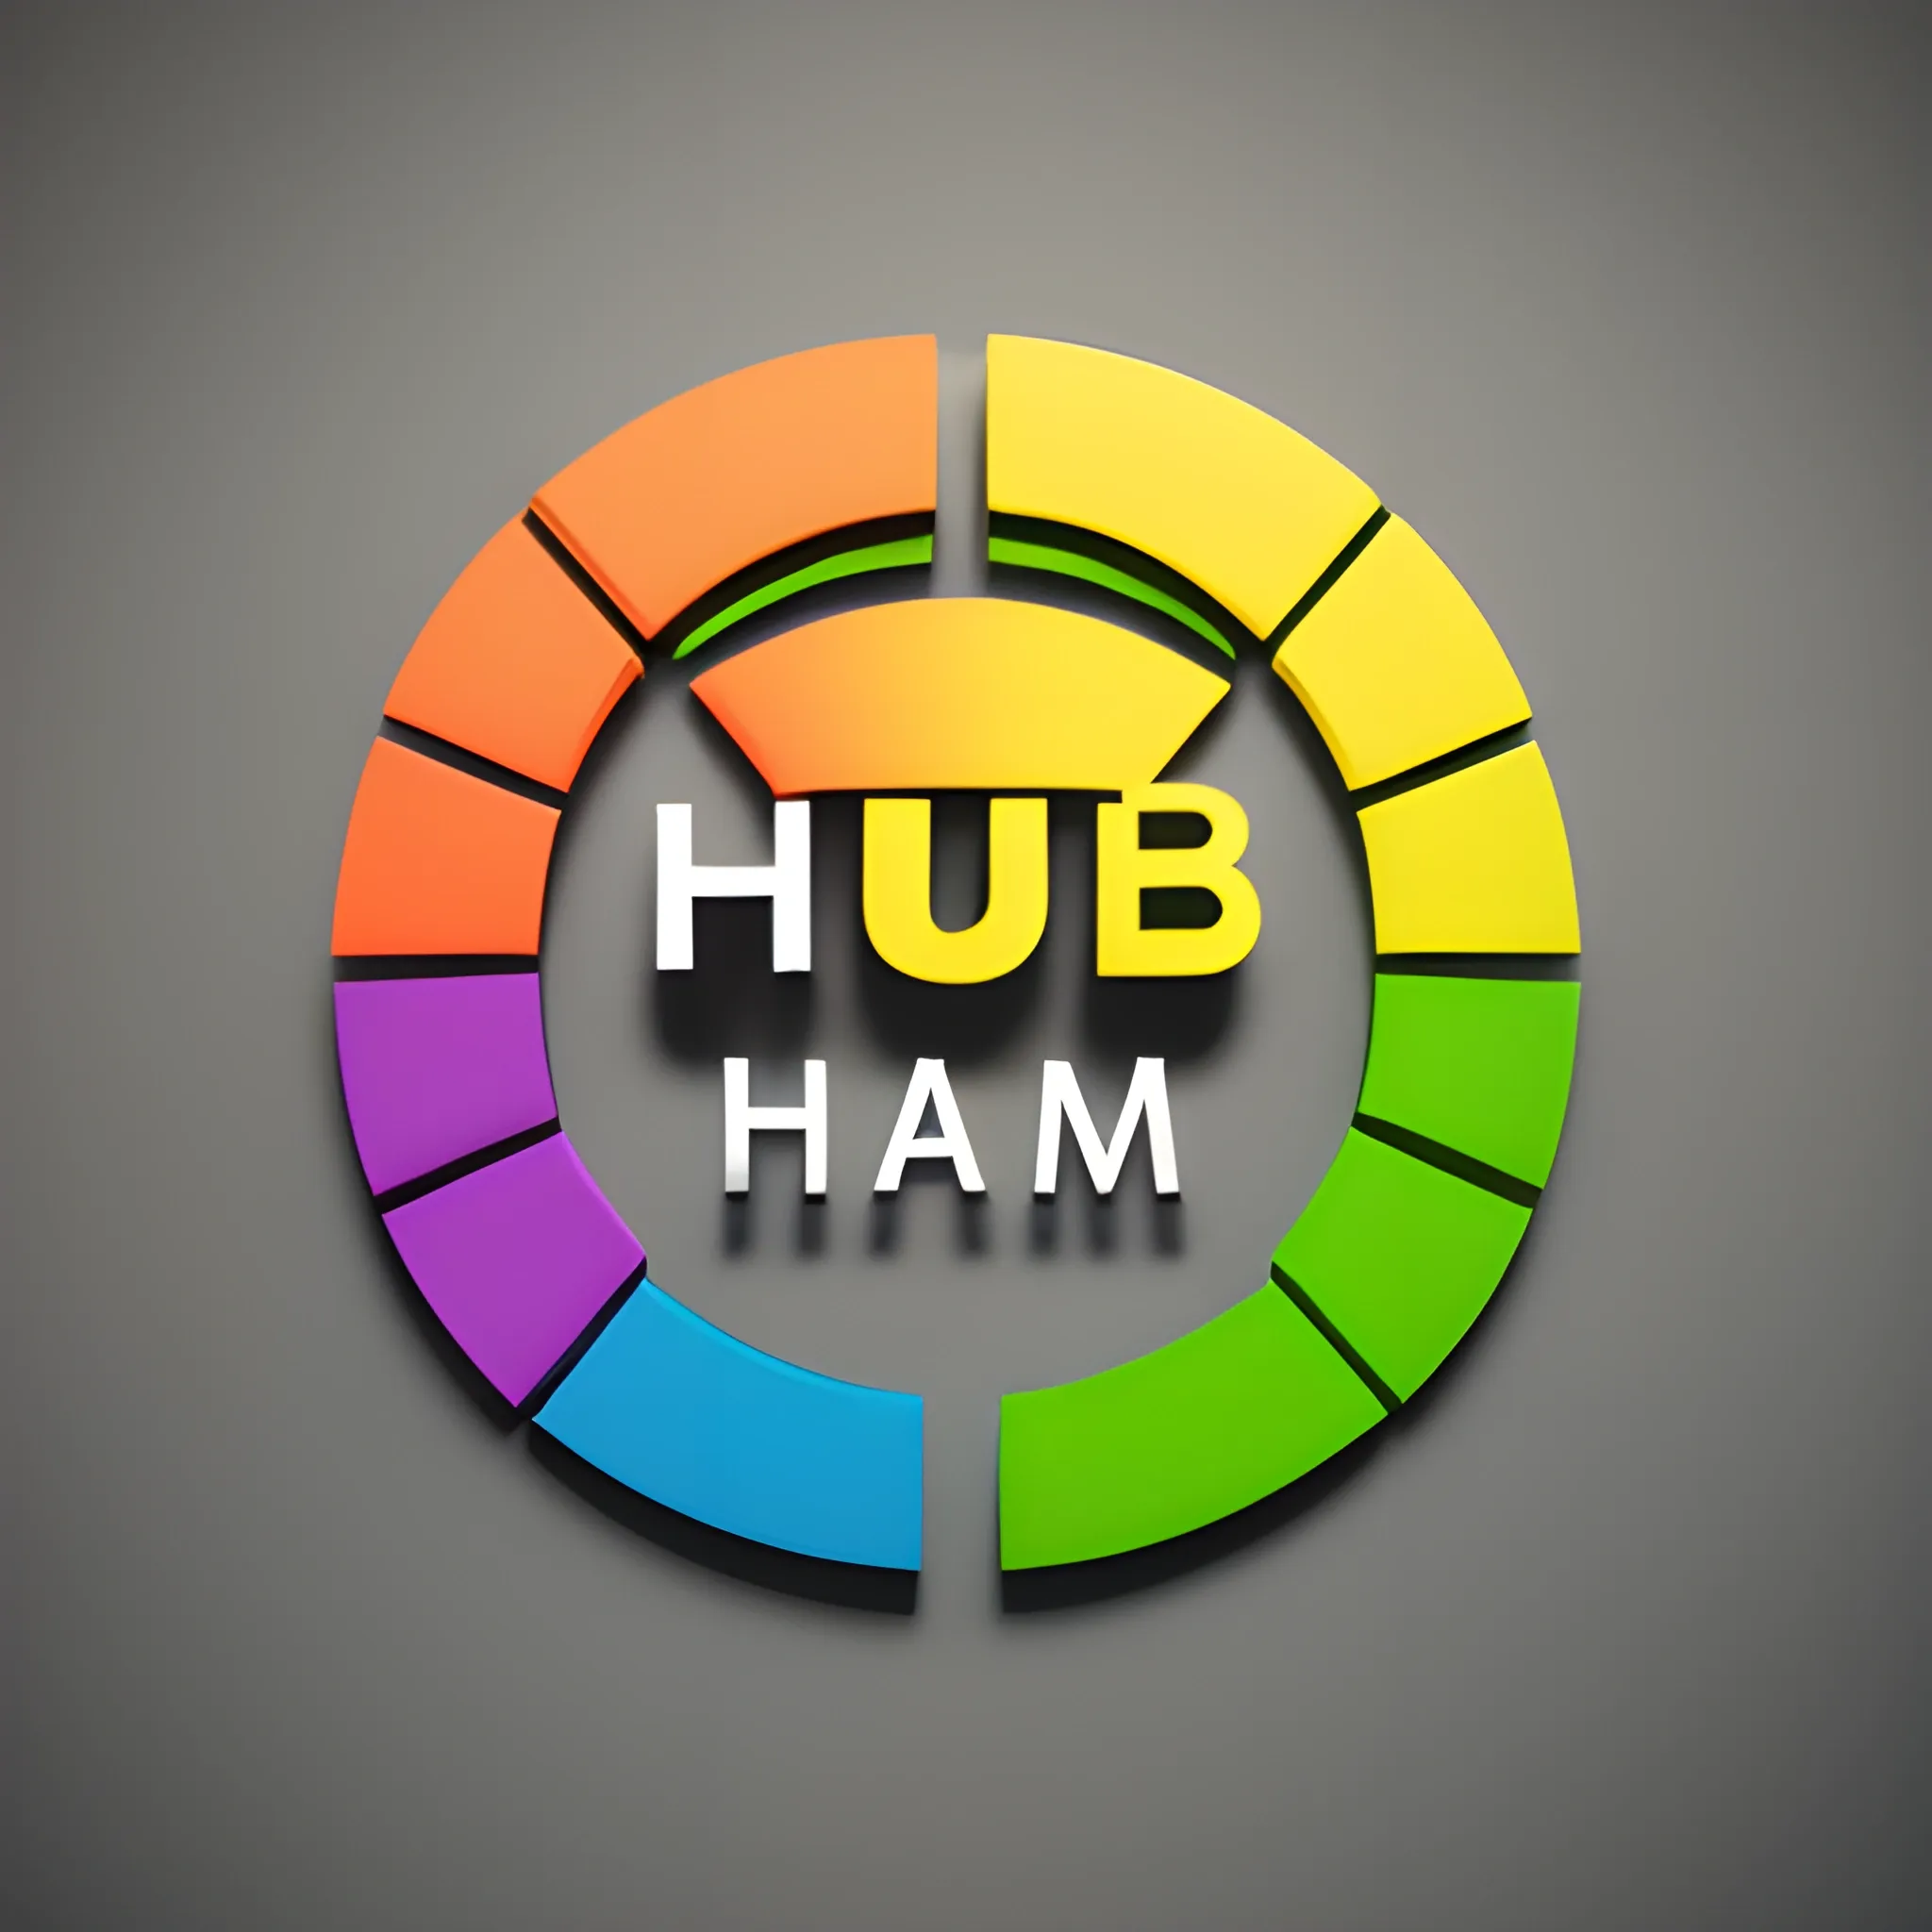 Huba Team bright logo, 3D, cutlery